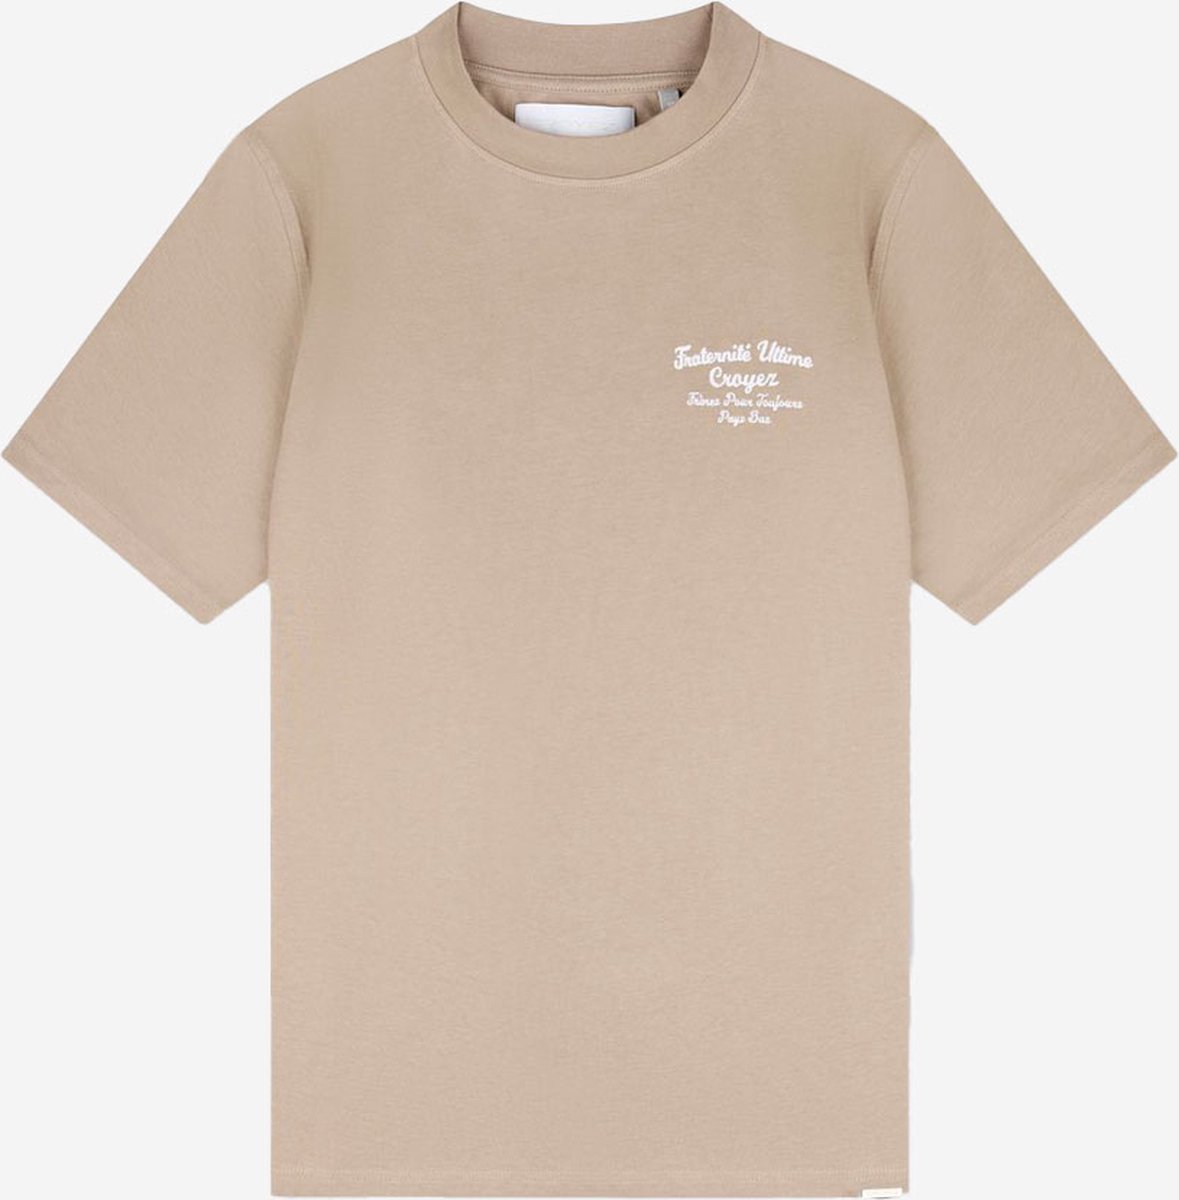 Croyez Fraternite T-Shirt - Groen - XL